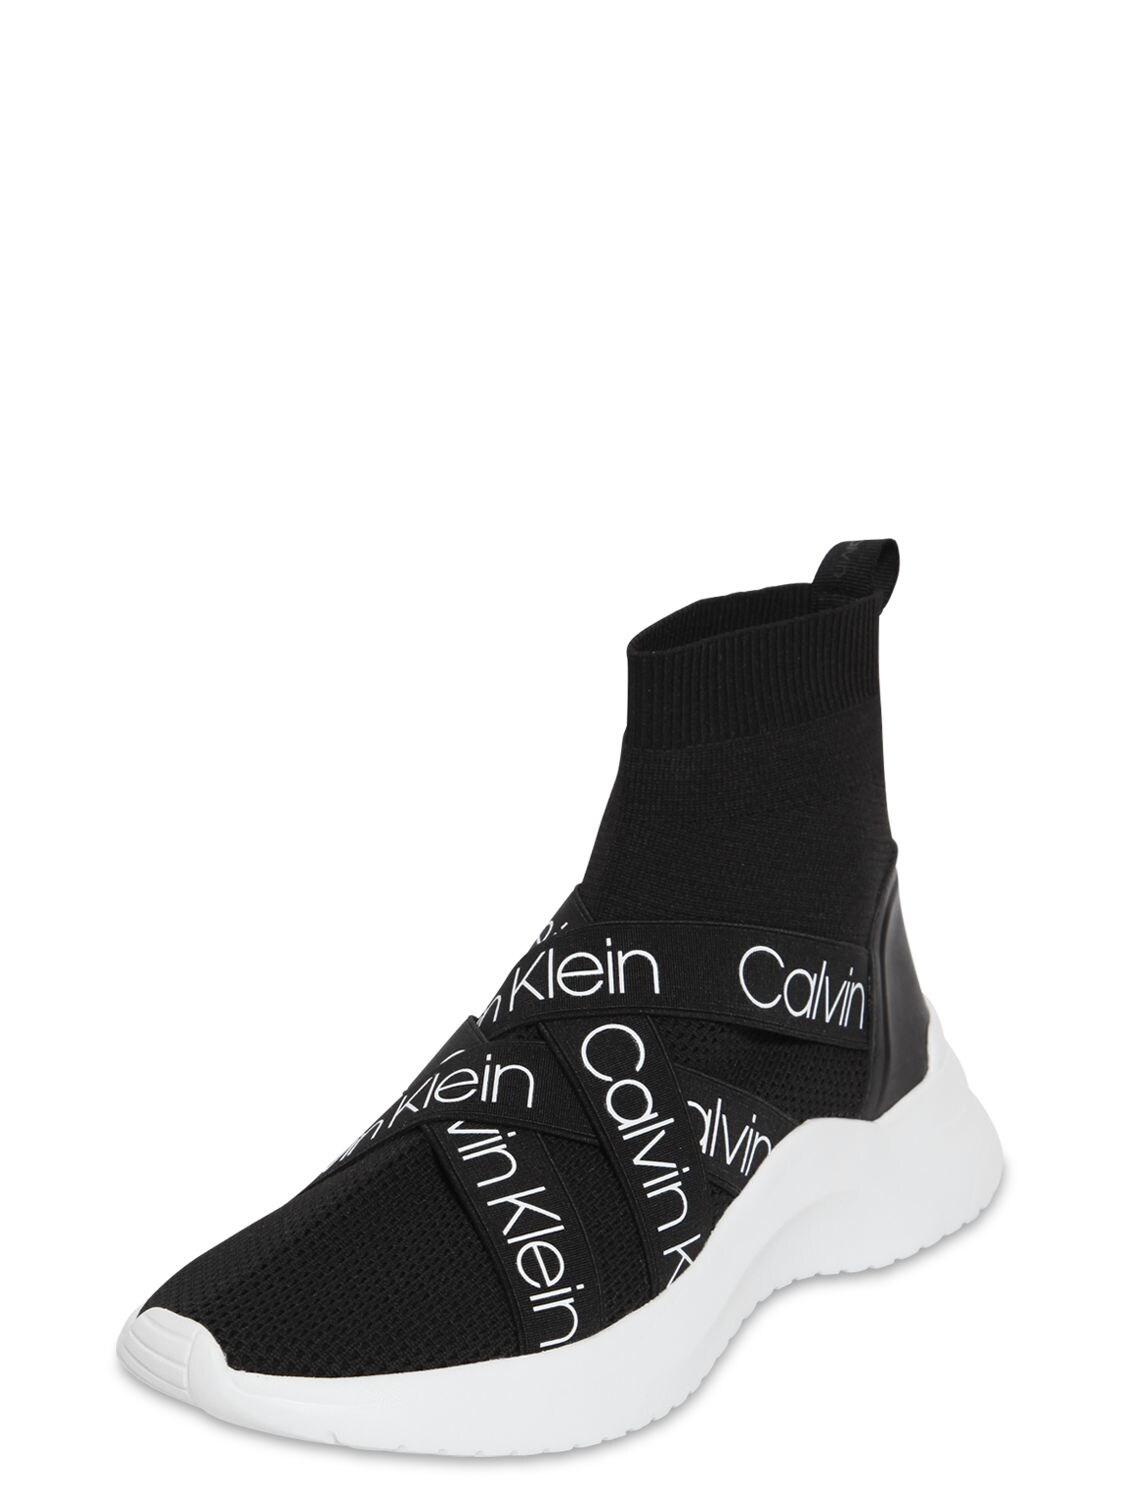 Calvin Klein Leather 30mm Umney Knit Sock Sneakers in Black/White (Black) -  Lyst